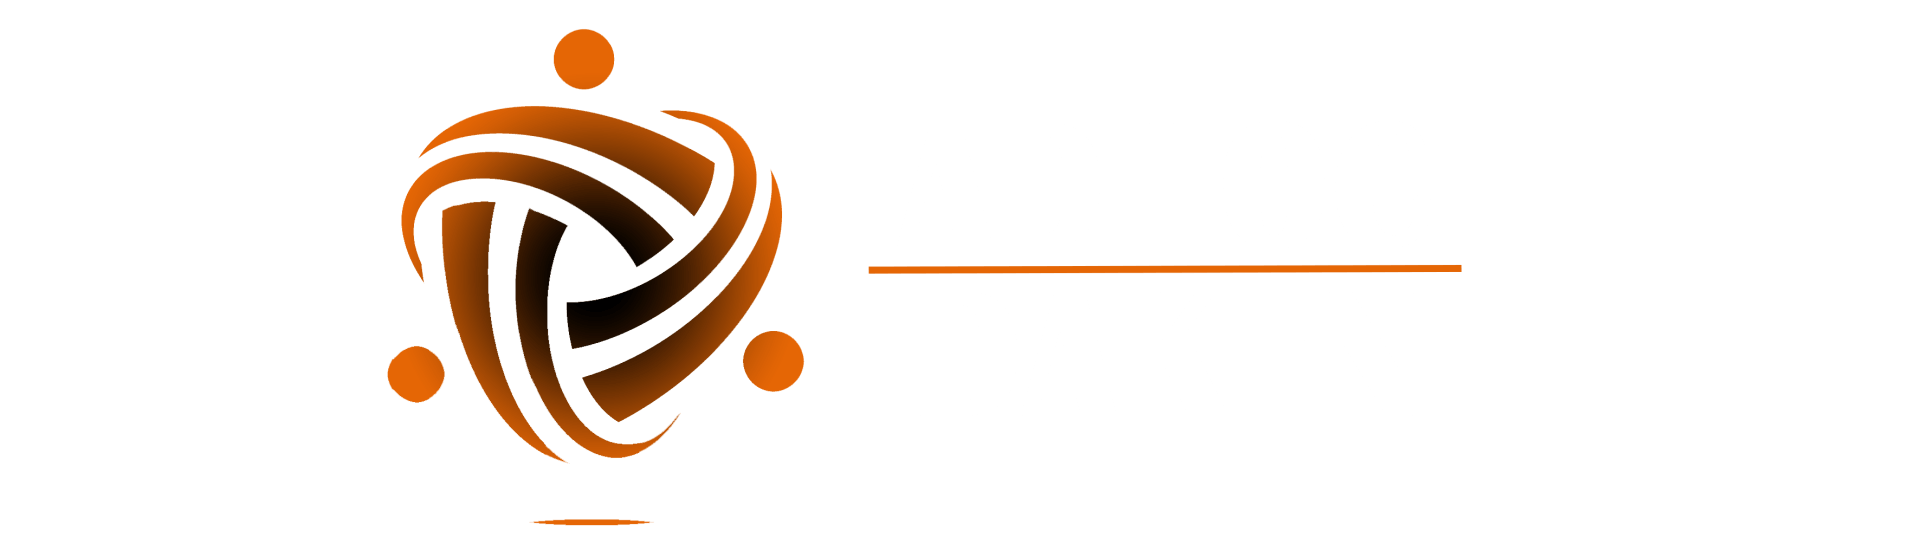 Adhoc Daken logo